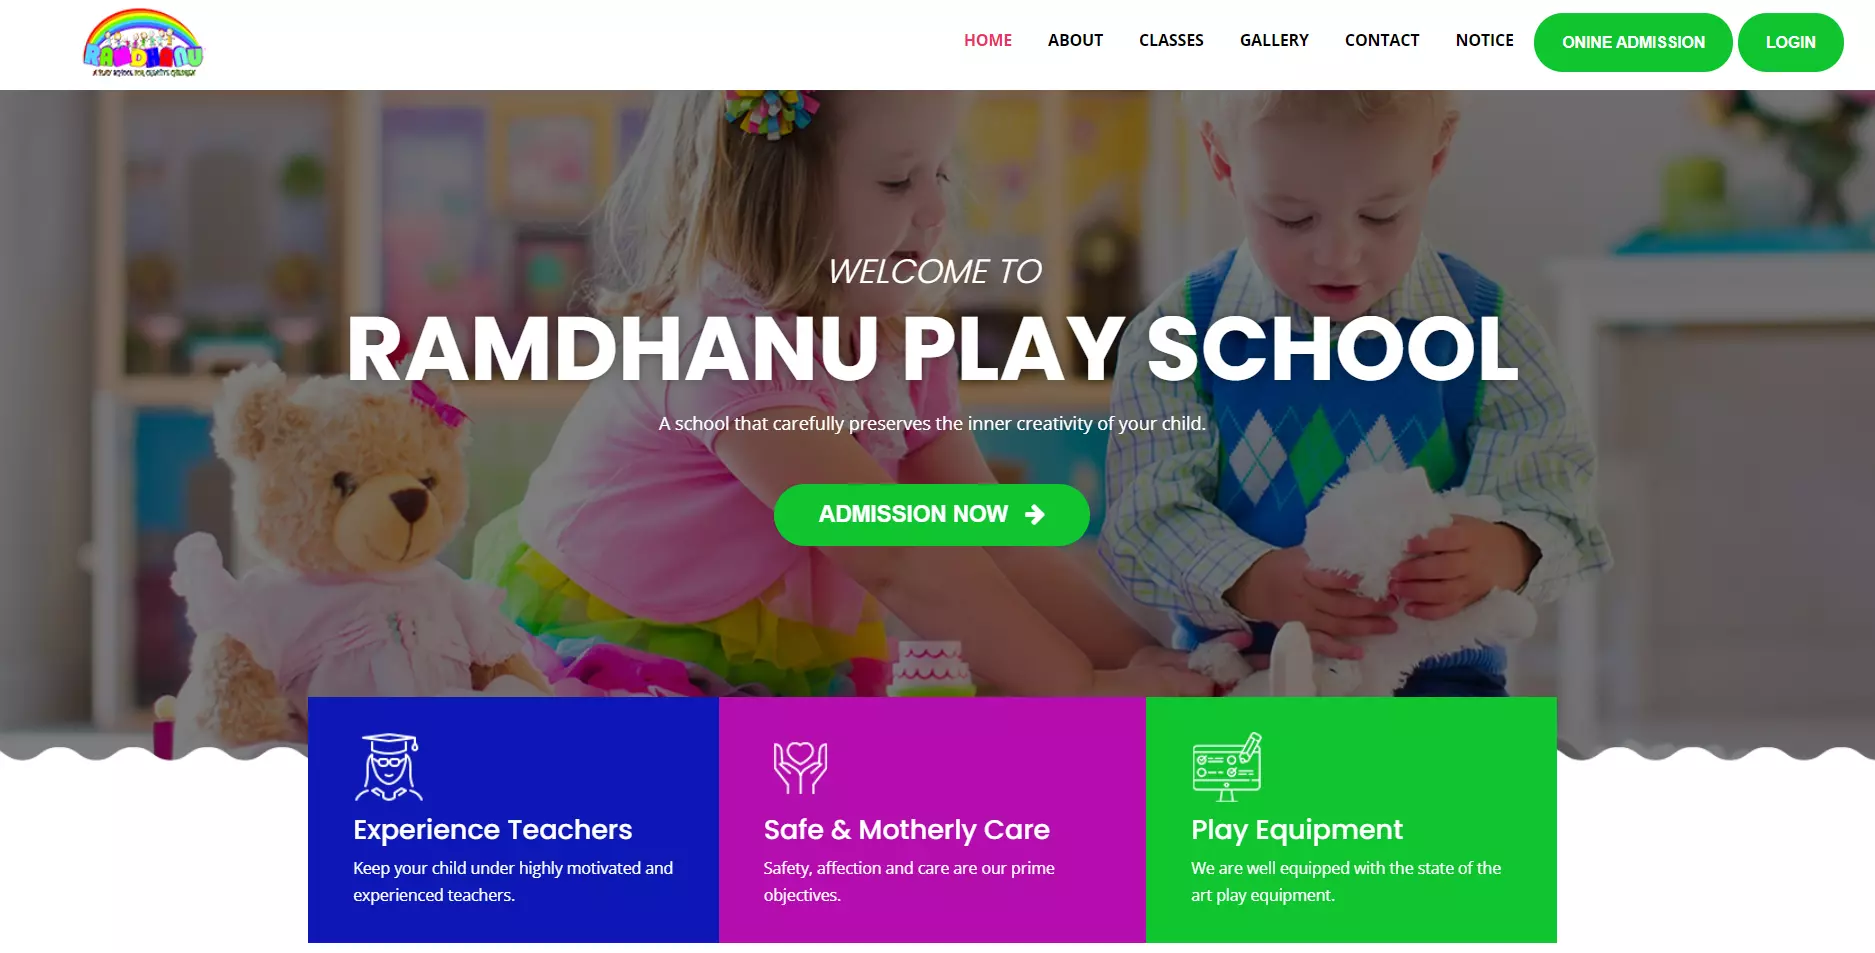 Ramdhanu Play School